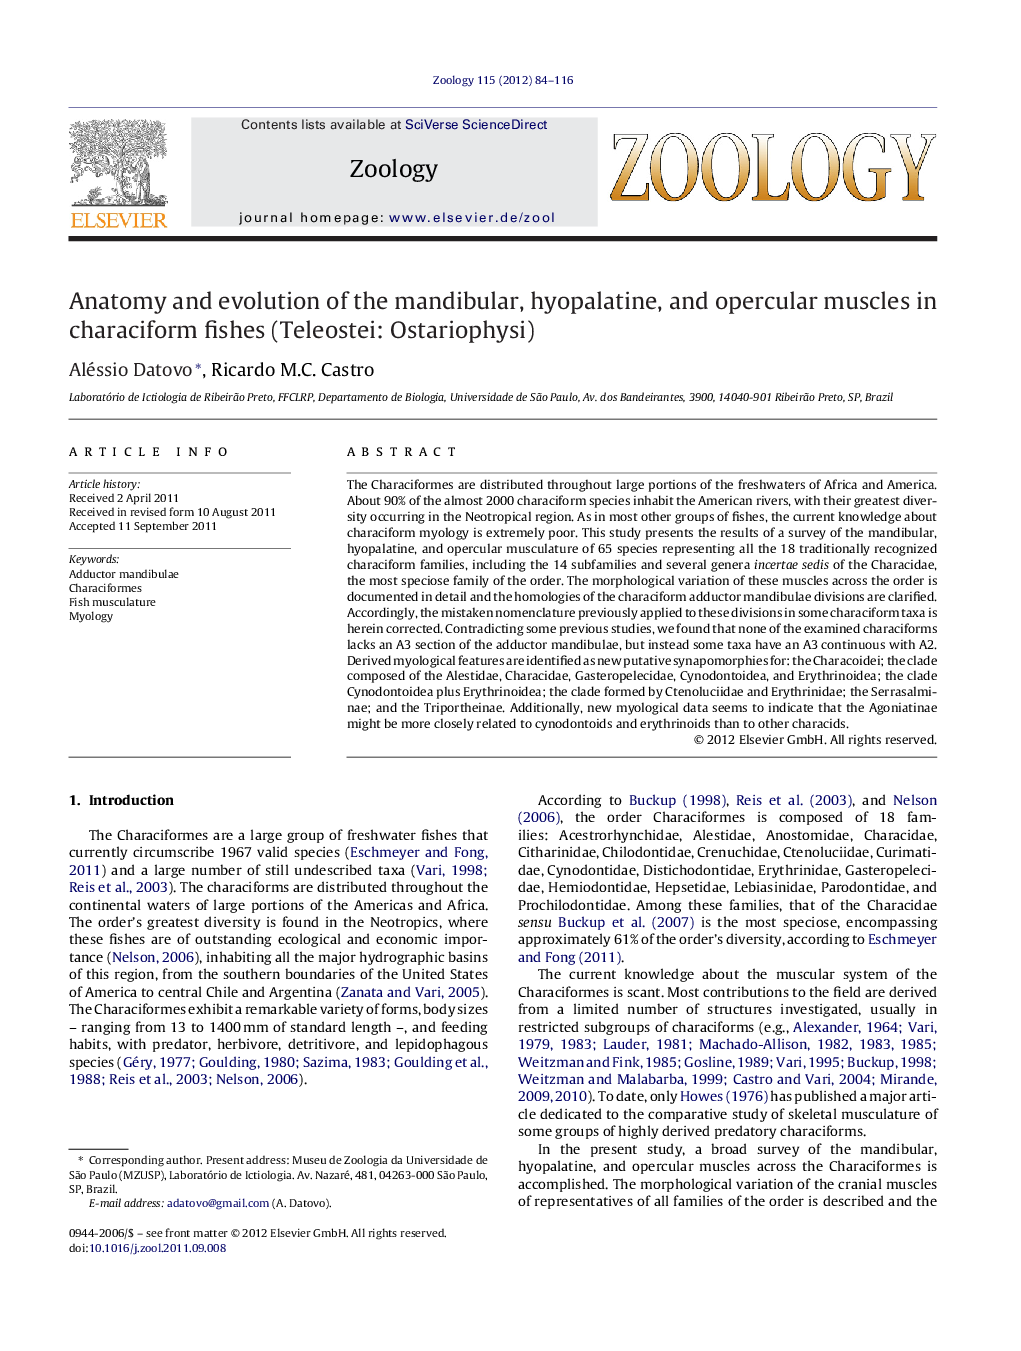 Anatomy and evolution of the mandibular, hyopalatine, and opercular muscles in characiform fishes (Teleostei: Ostariophysi)